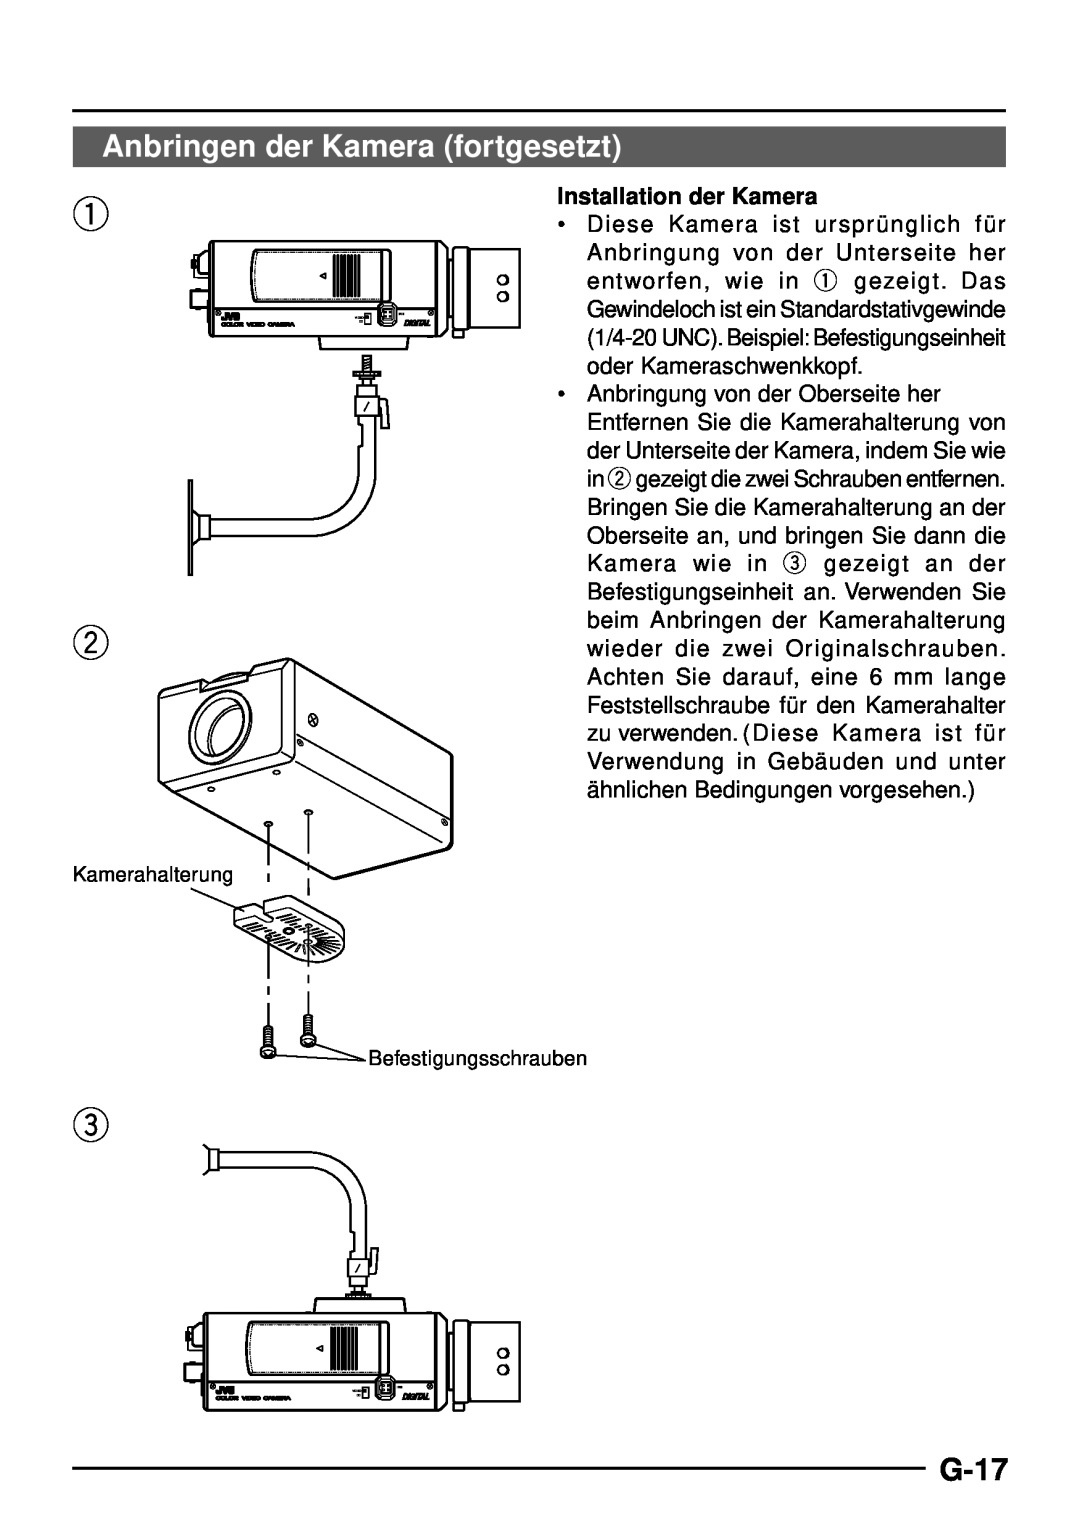 JVC TK-C1460 manual Anbringen der Kamera fortgesetzt, G-17, Installation der Kamera 